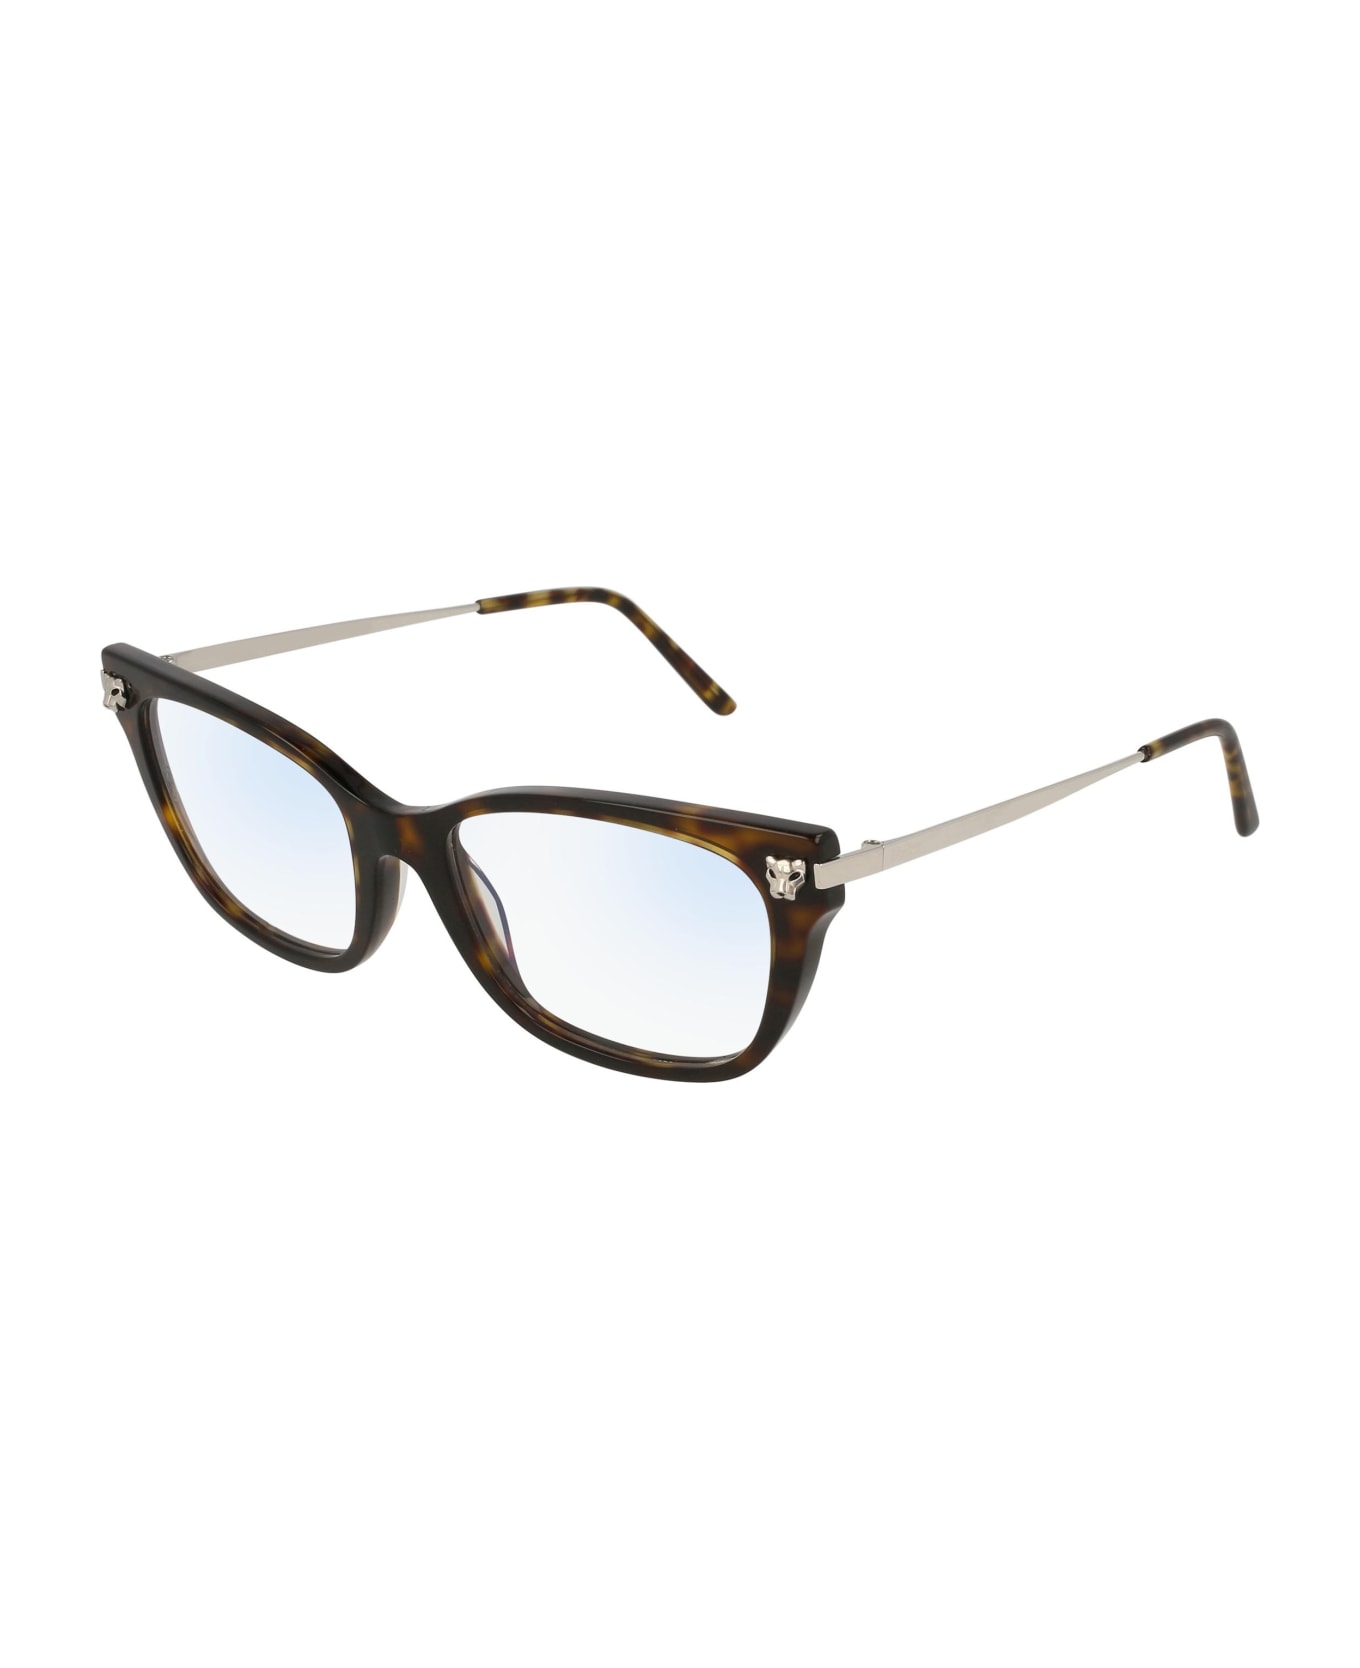 Cartier Eyewear Glasses - Marrone tartarugato アイウェア